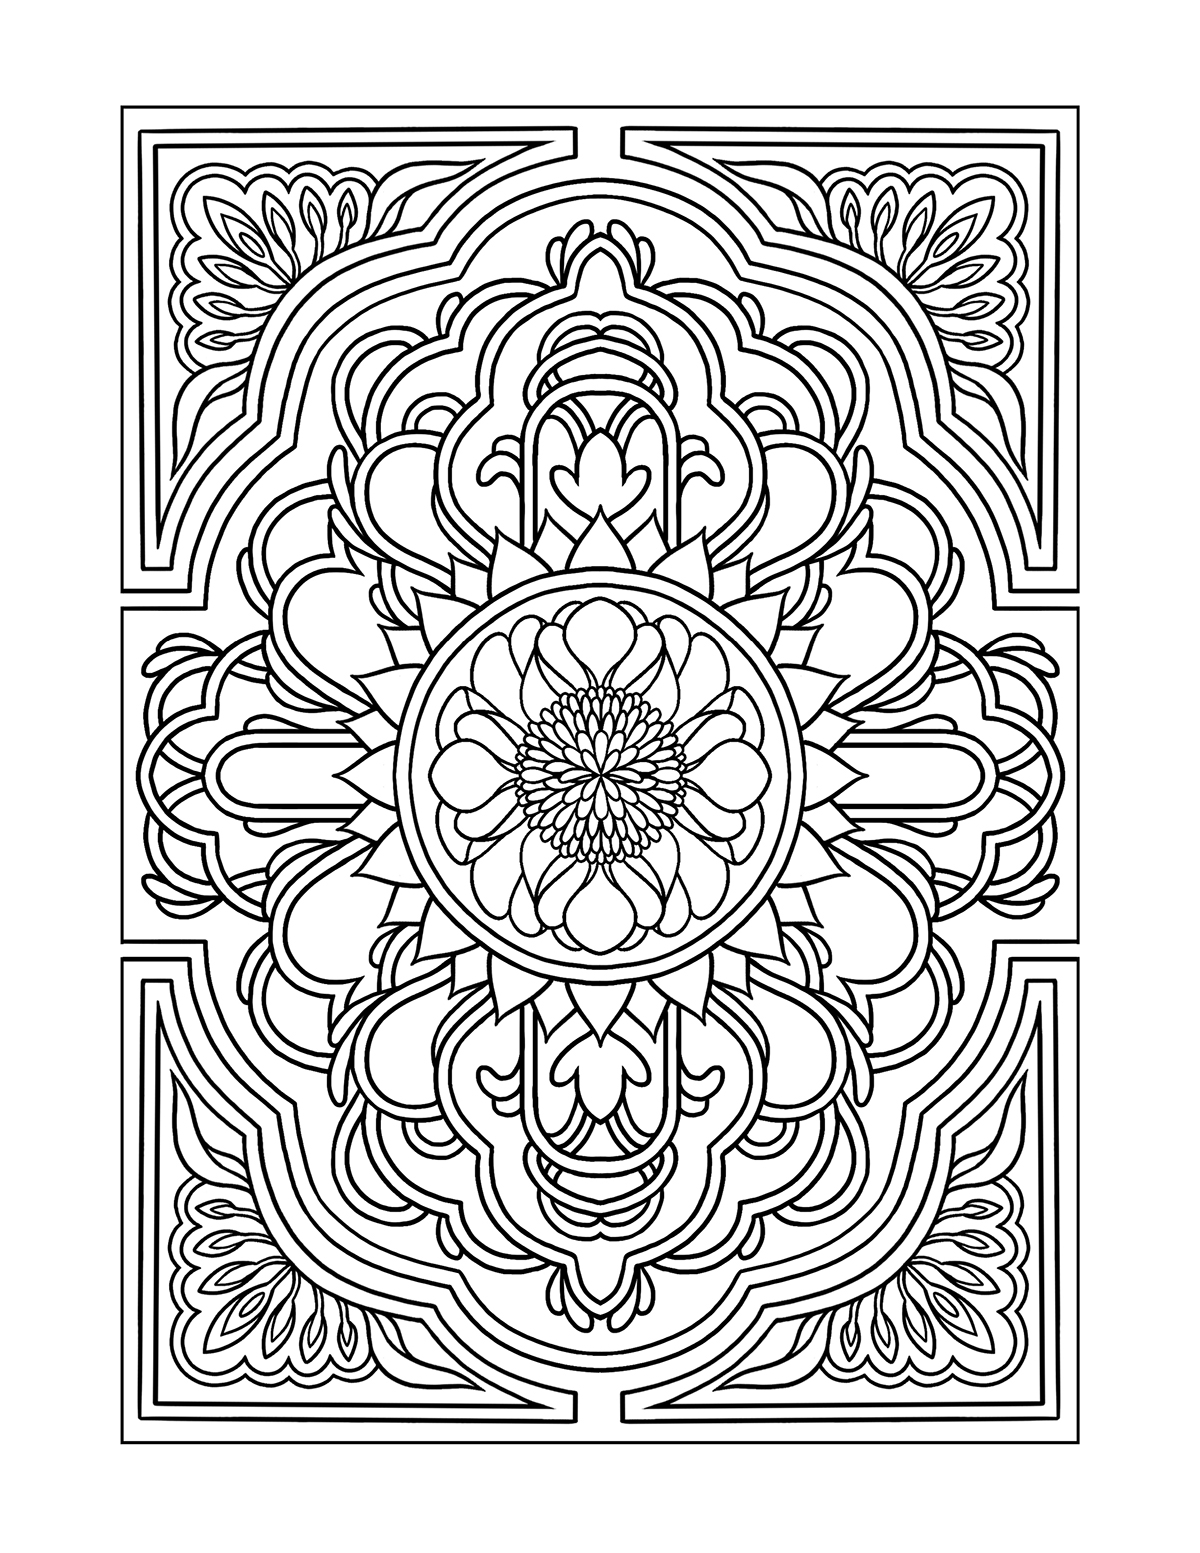 coloring book grownups book design patternmaking art deco art nouveau constructivism bauhaus modern inspired